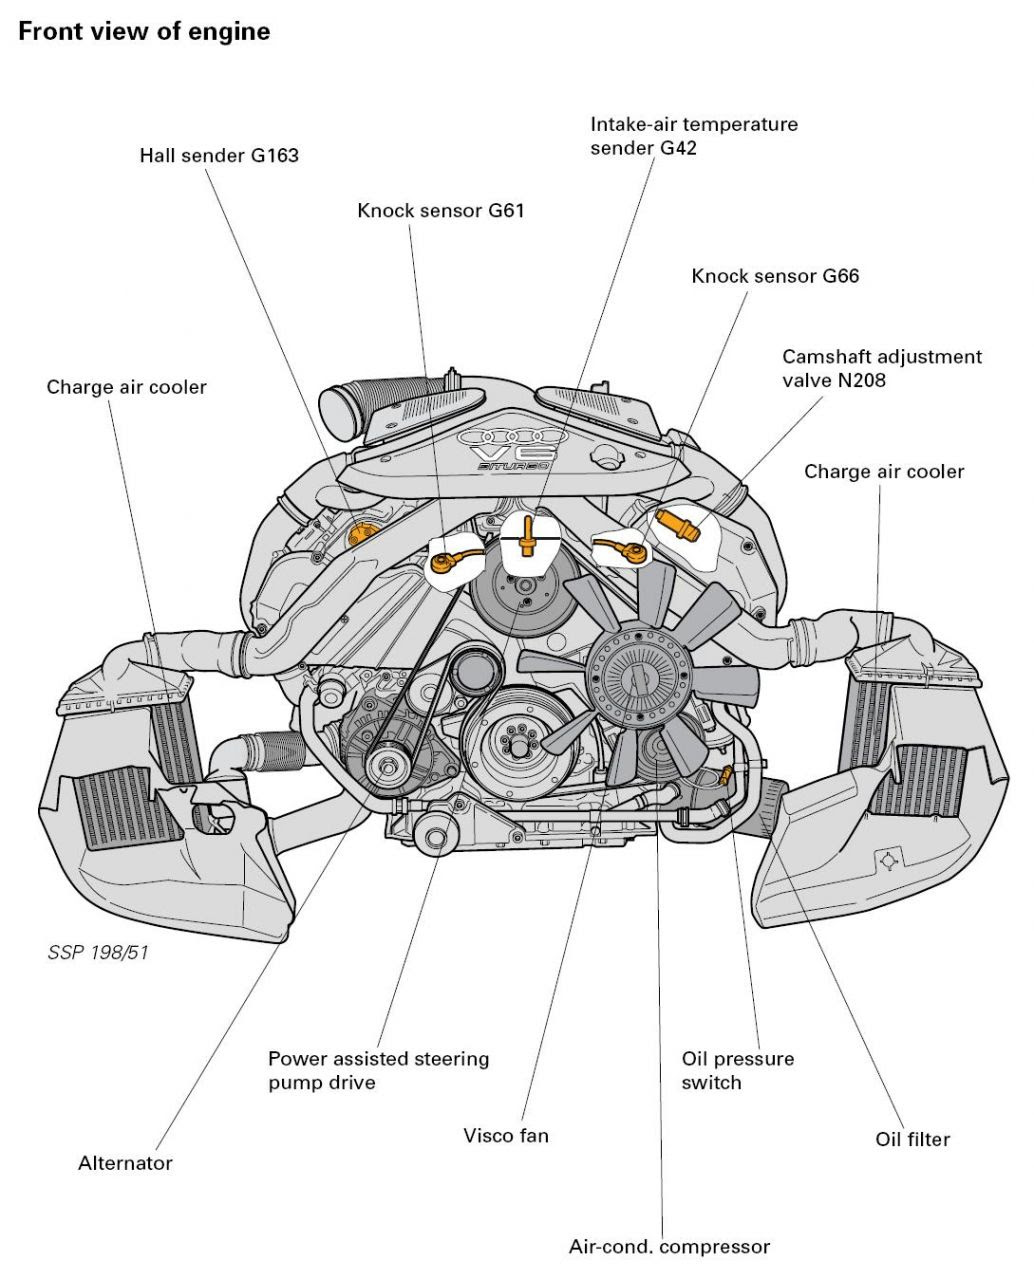 2001 Audi All Road Engine Diagram - Wiring Diagrams